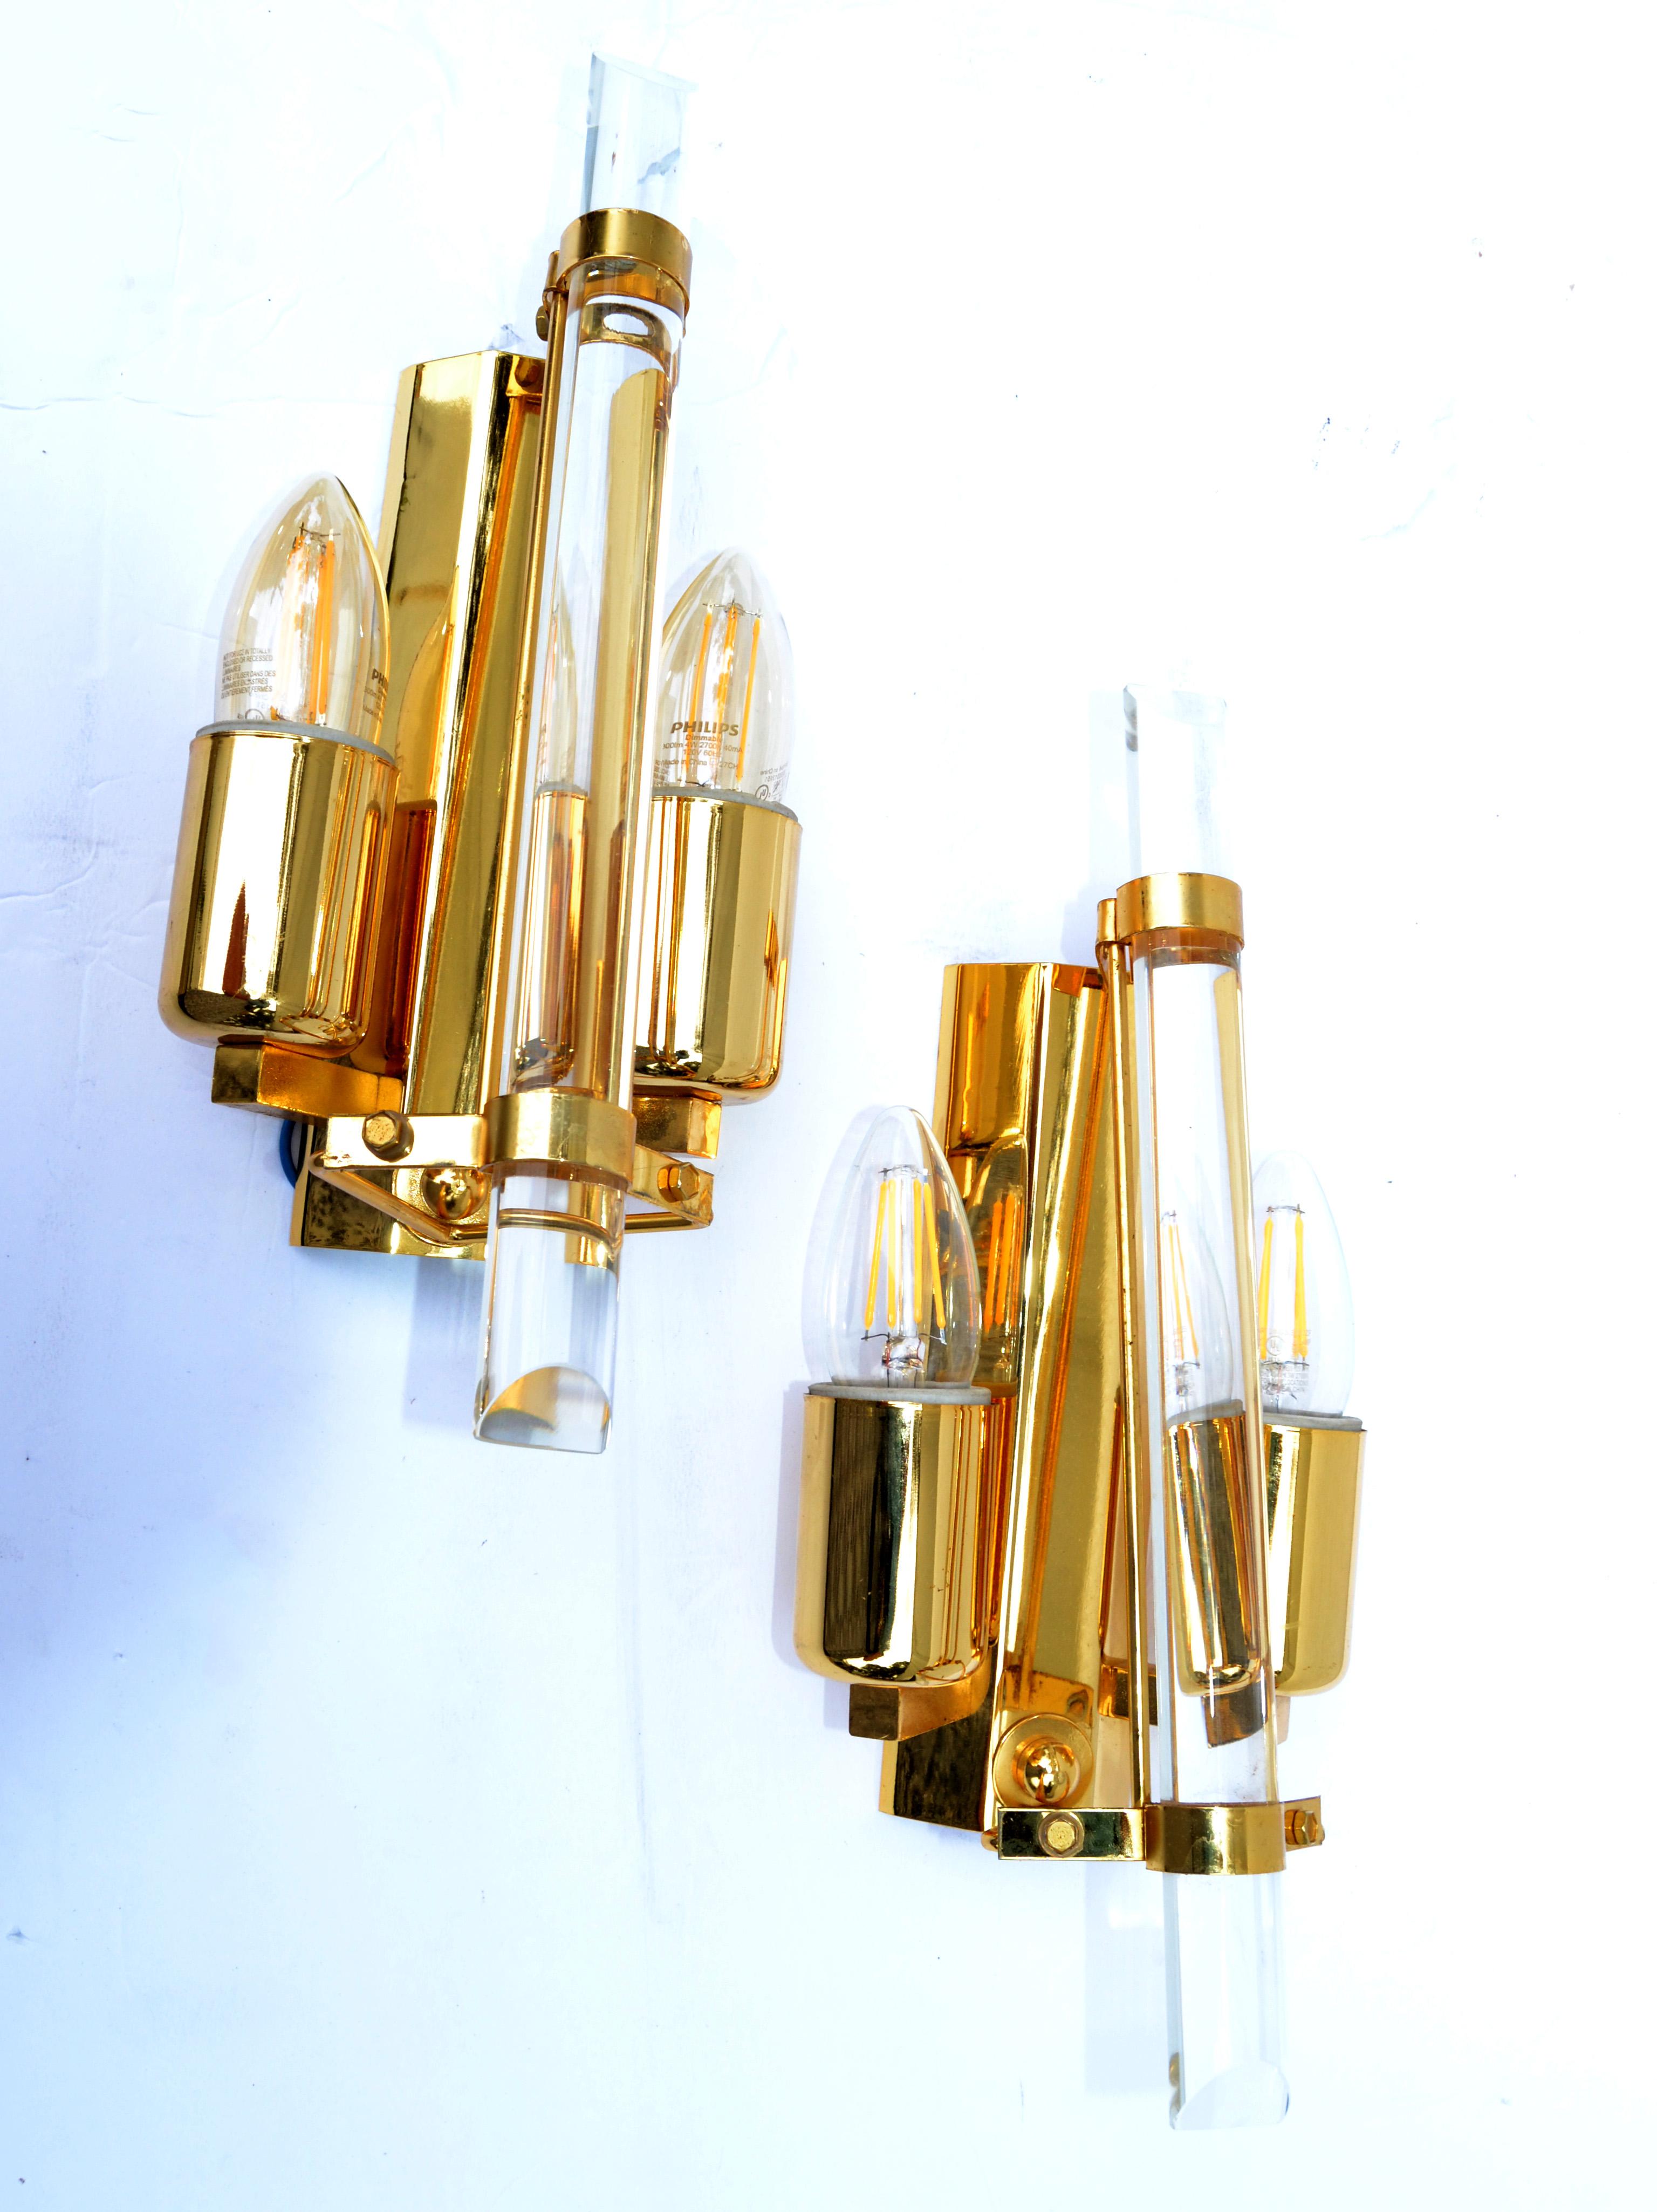 Pair of Stilkronen Sconces Gold Plate & Crystal Wall Lights Mid-Century Modern For Sale 11